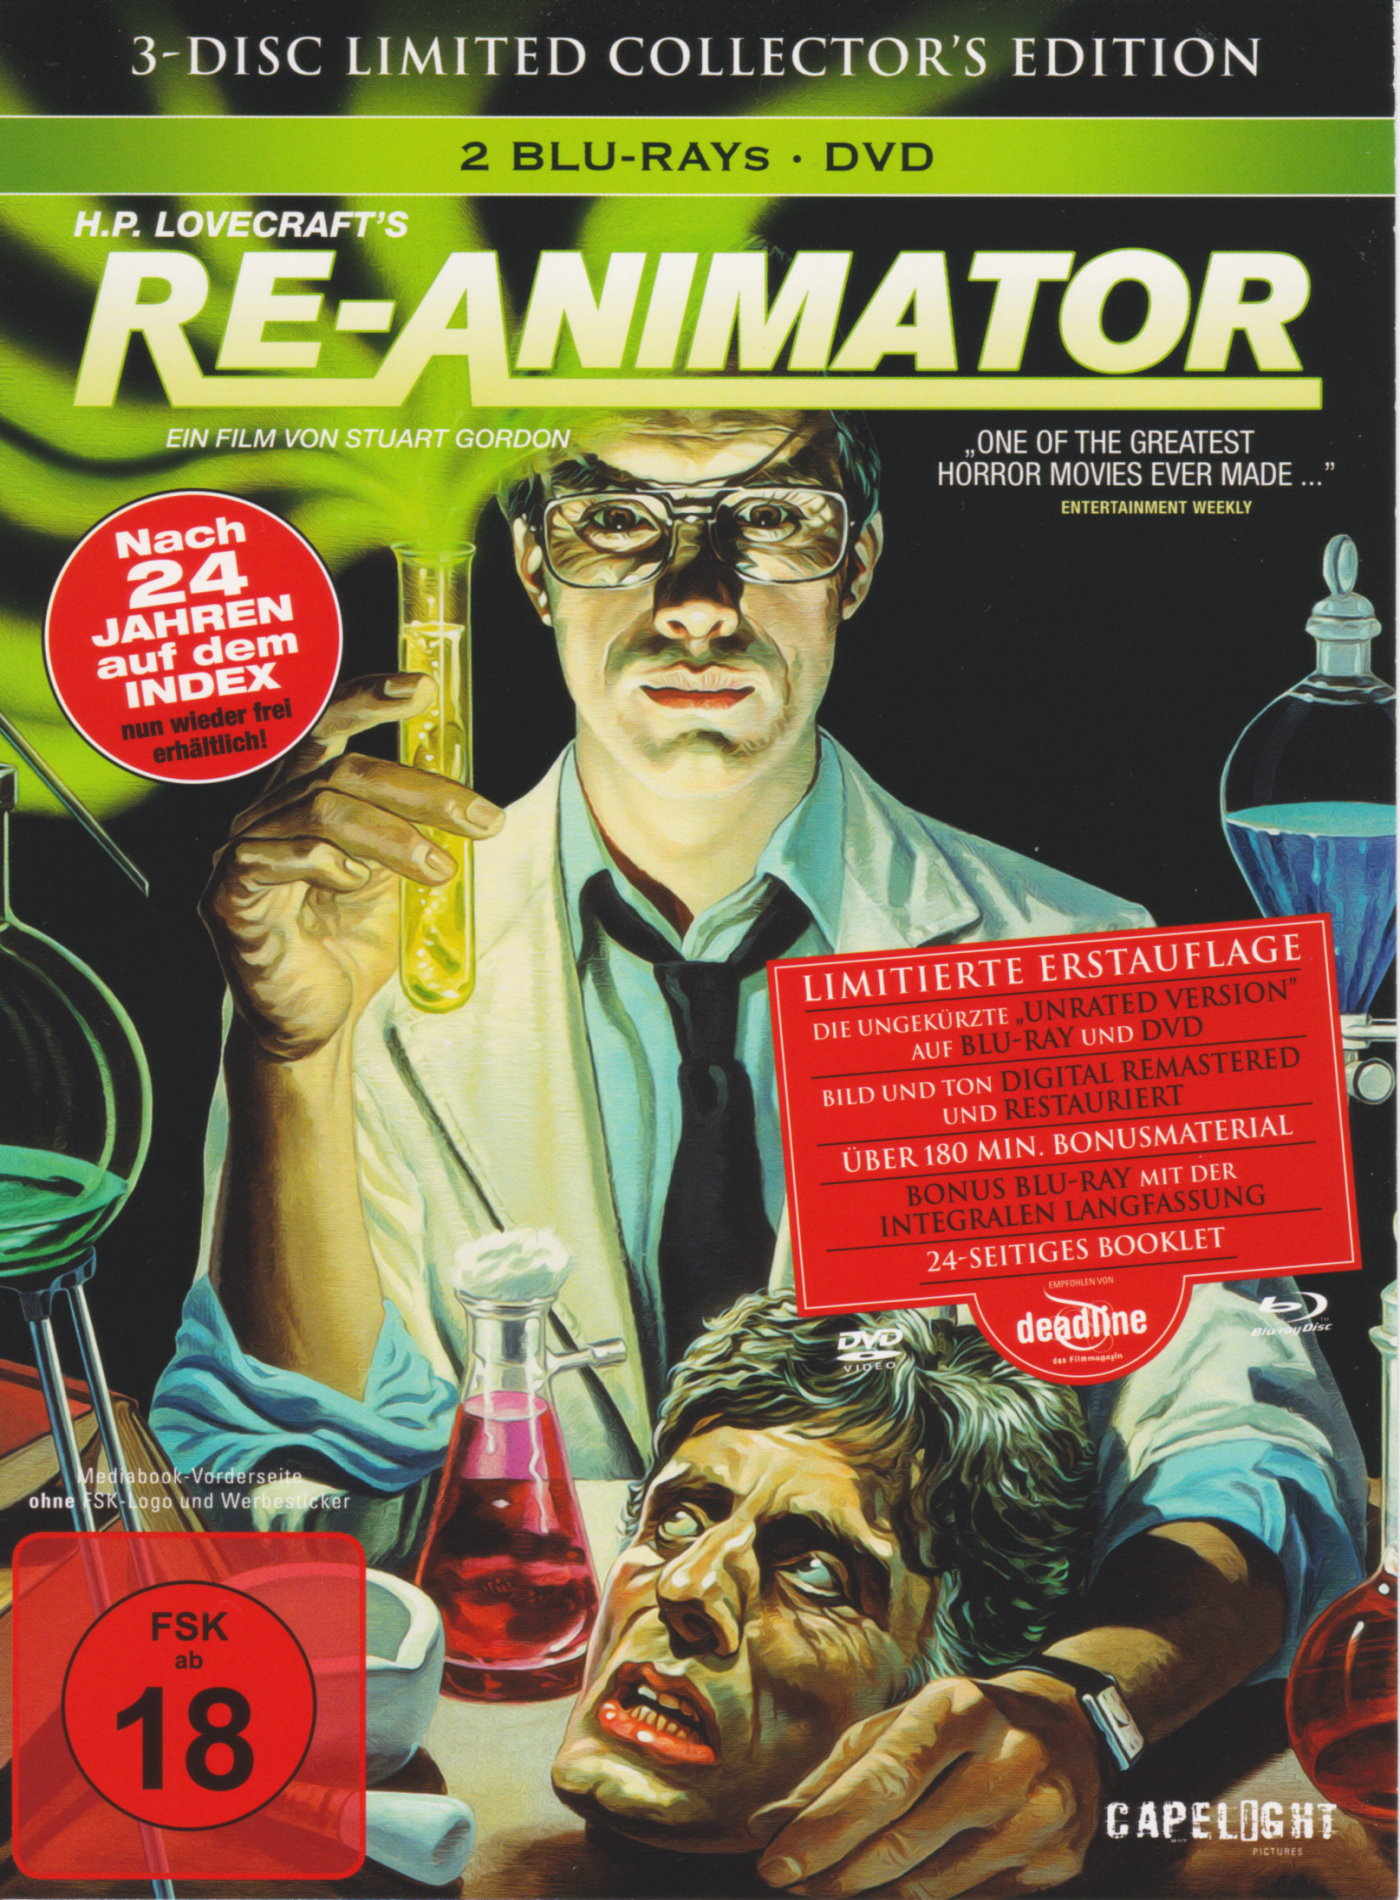 Cover - Re-Animator.jpg